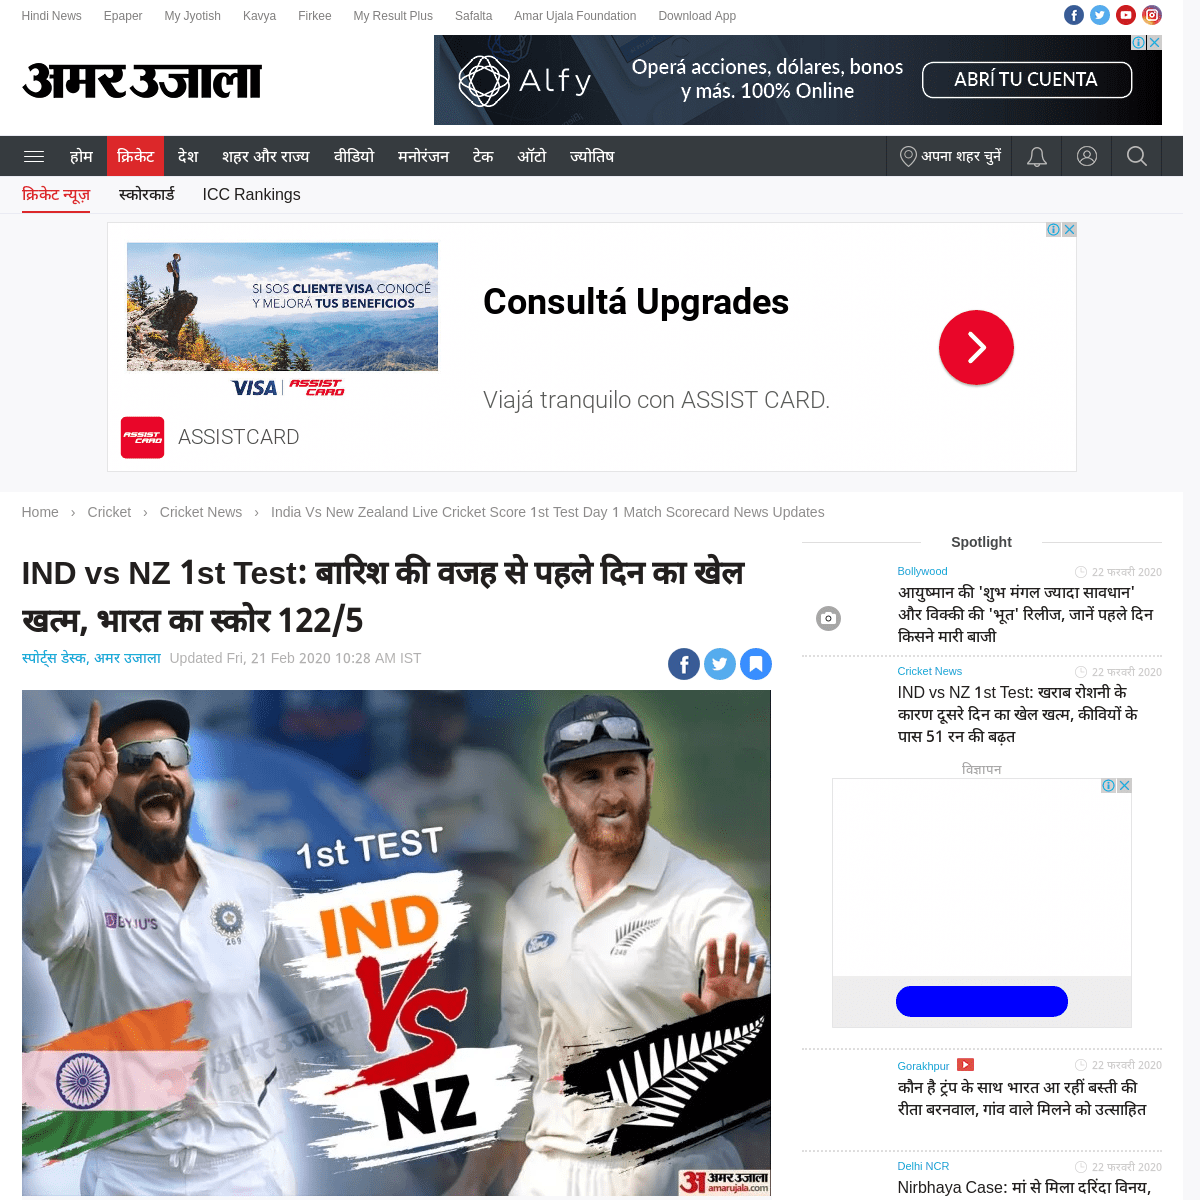 A complete backup of www.amarujala.com/cricket/cricket-news/india-vs-new-zealand-1st-test-match-day-1-live-cricket-score-news-up